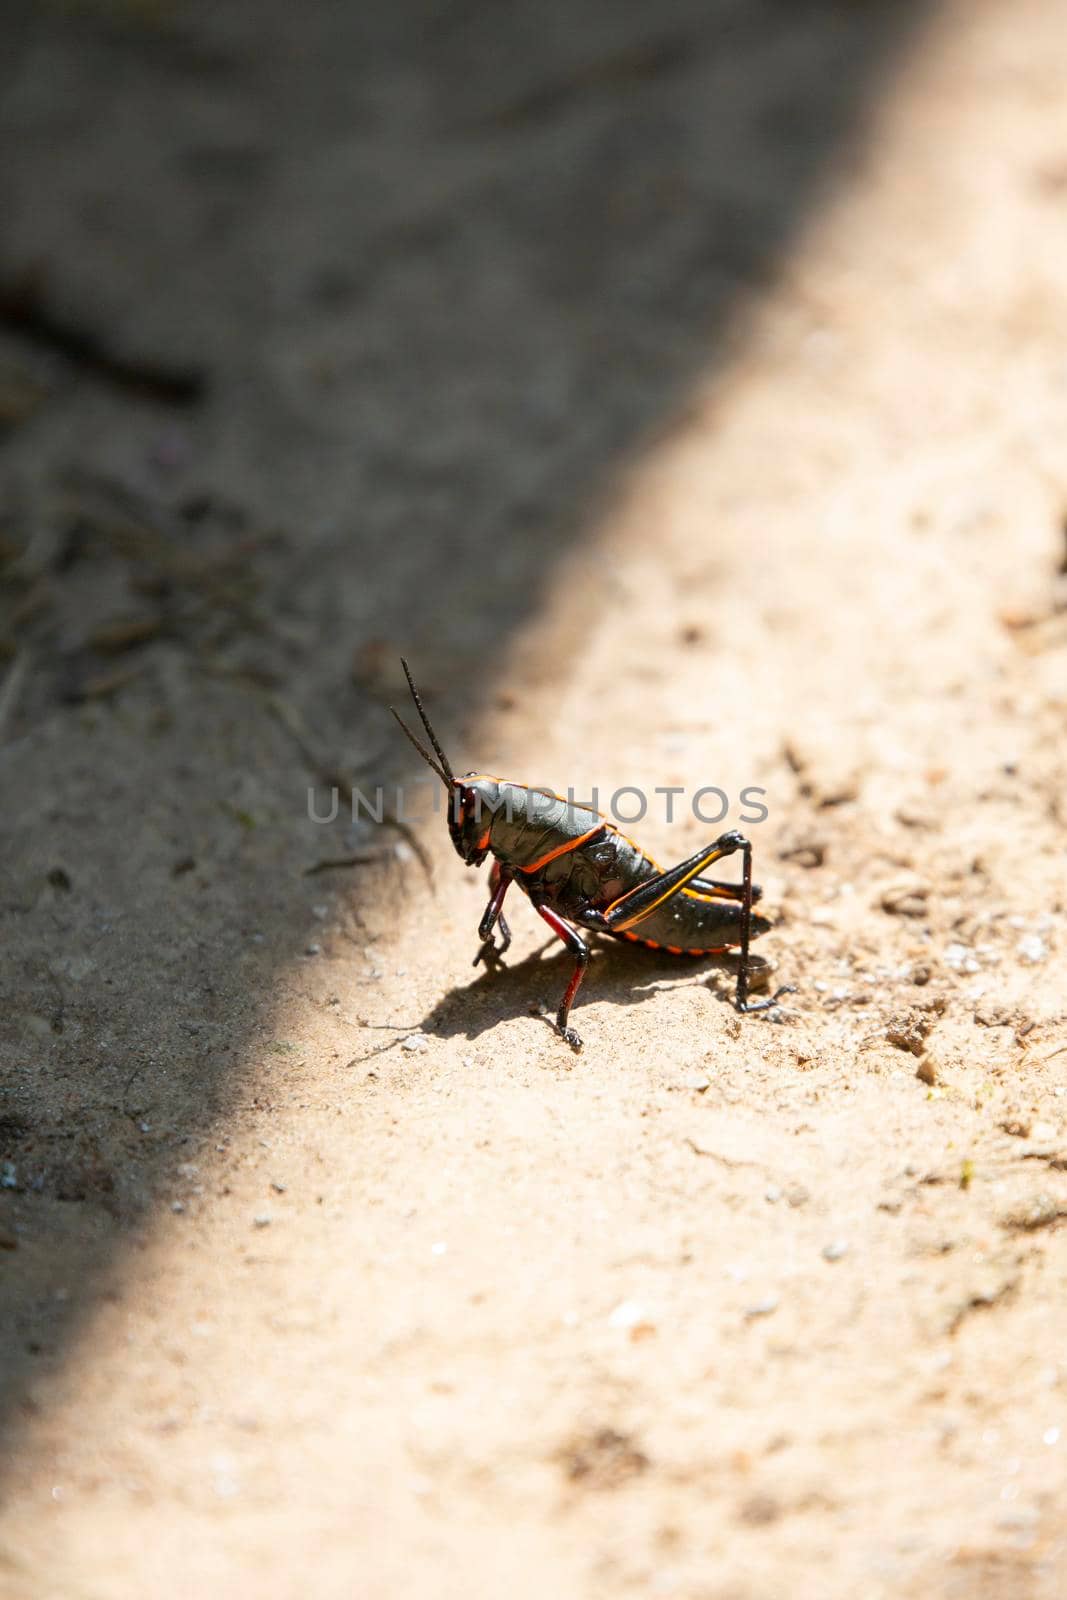 Southeastern lubber grasshopper (Romalea microptera) in dirt near a shadow